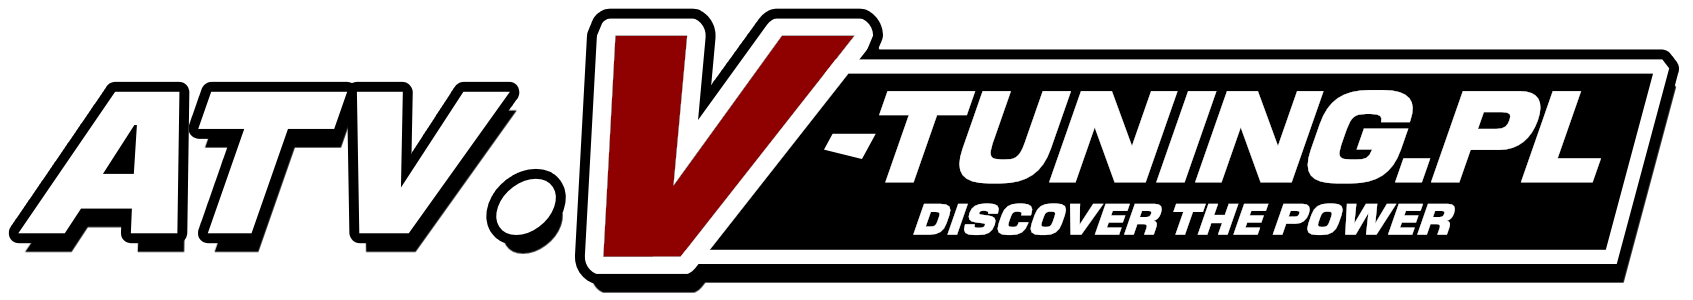 Logo V-Tuning Tir